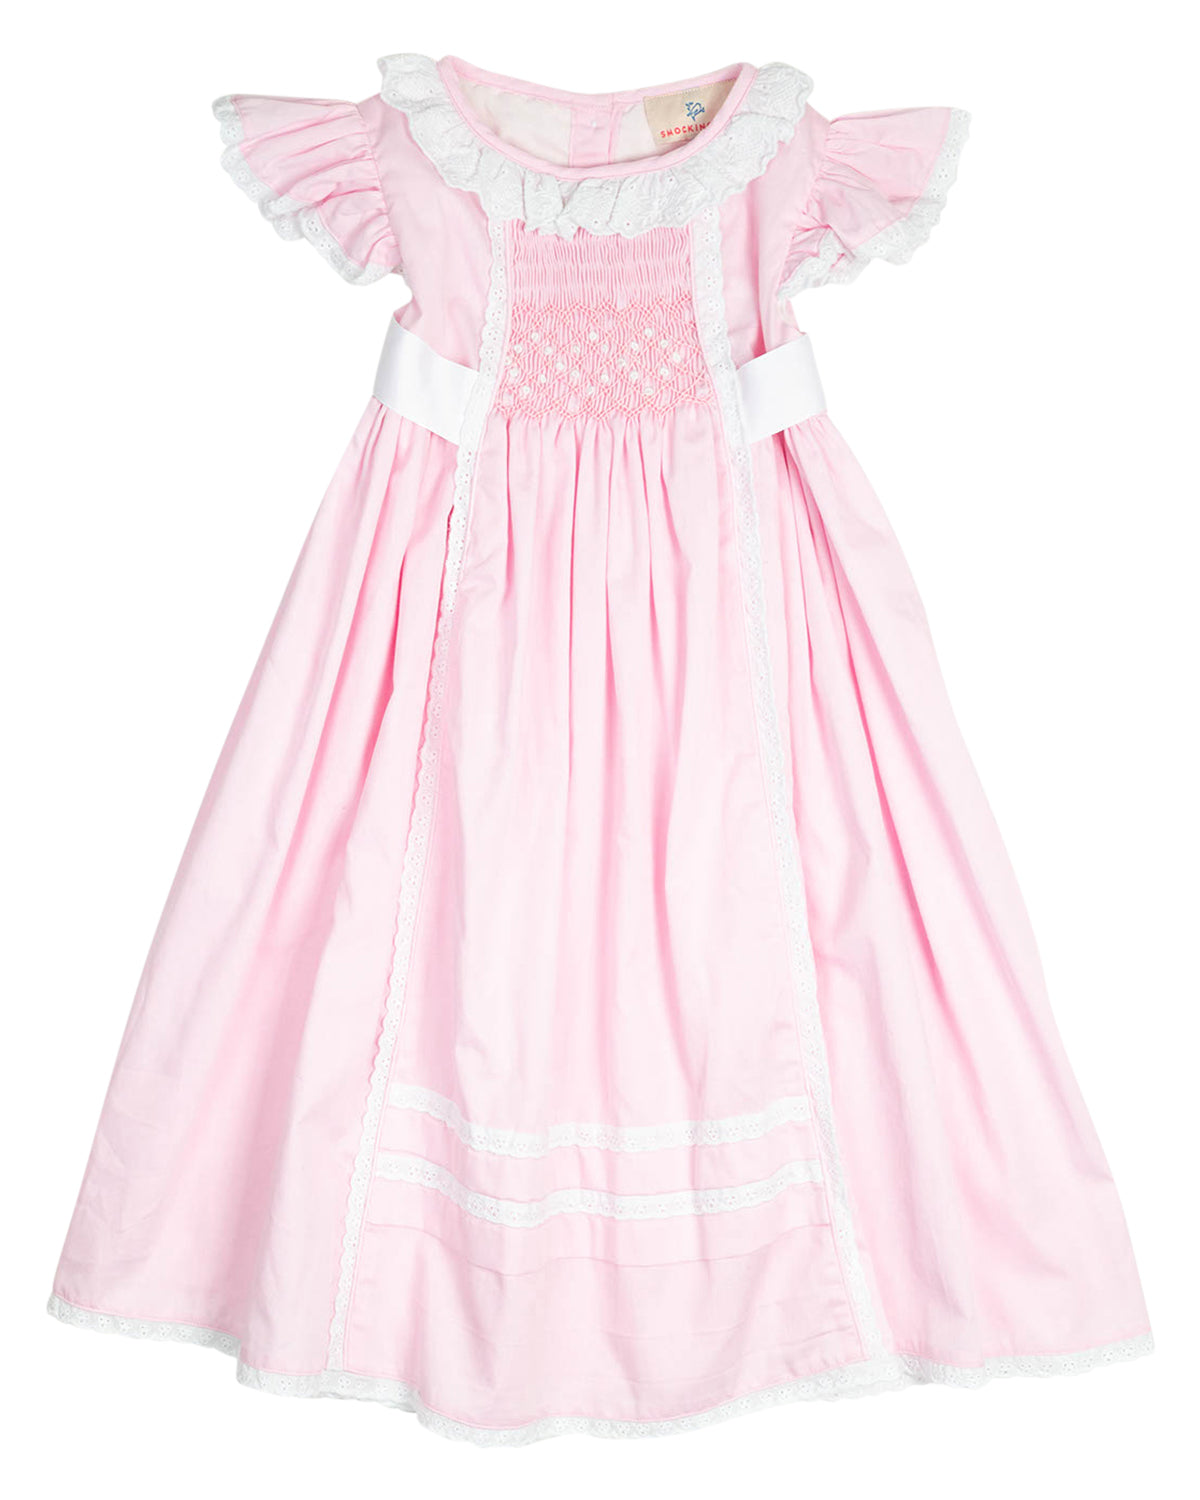 Pink Smocked Clara Dress with Sash